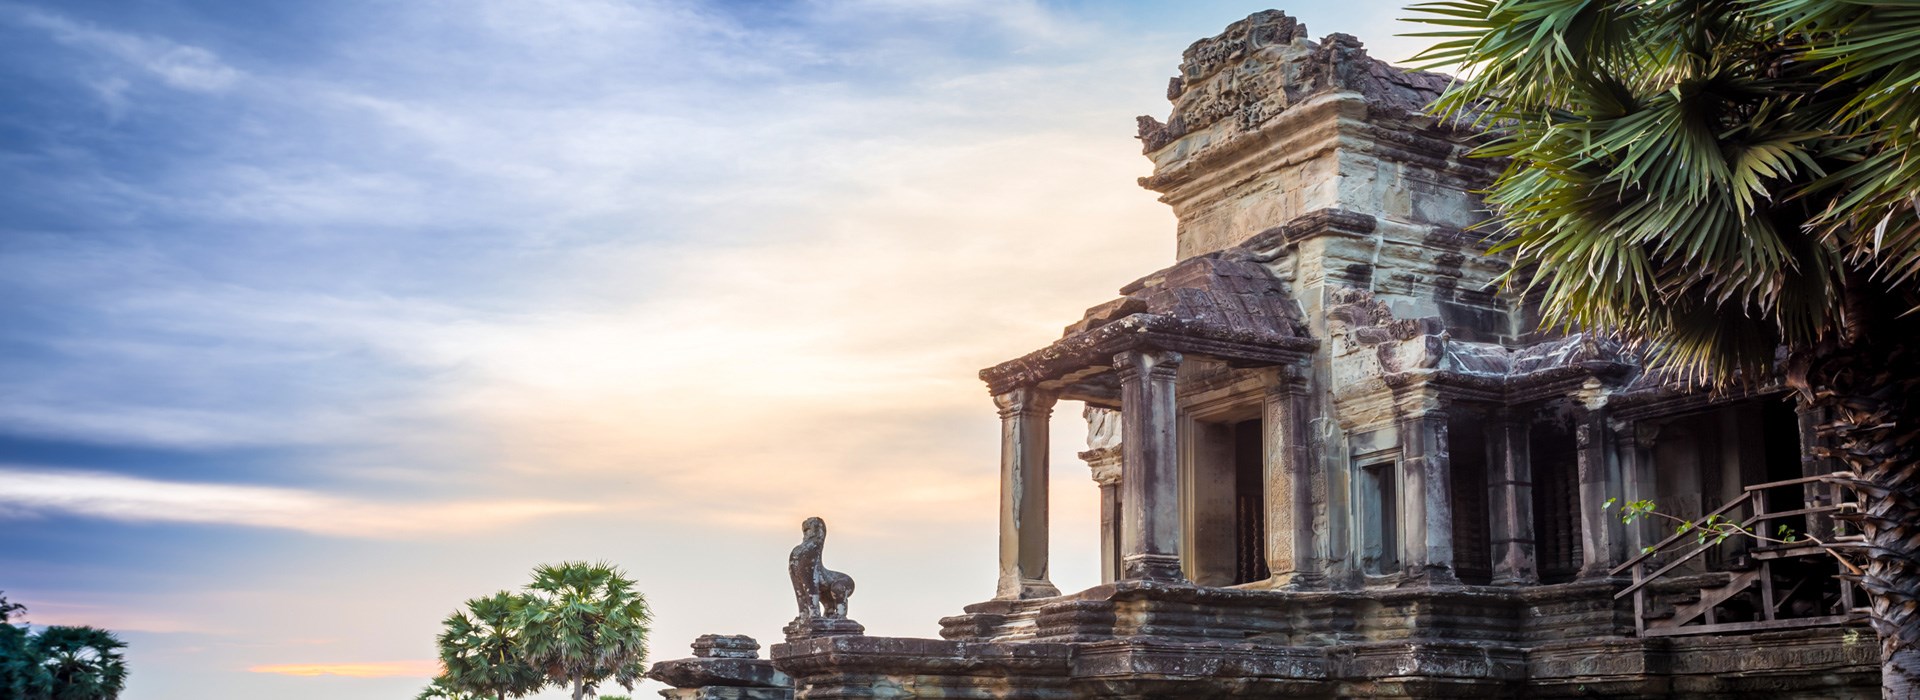 Visiter Les temples d'Angkor (Cambodge) - Laos-Cambodge